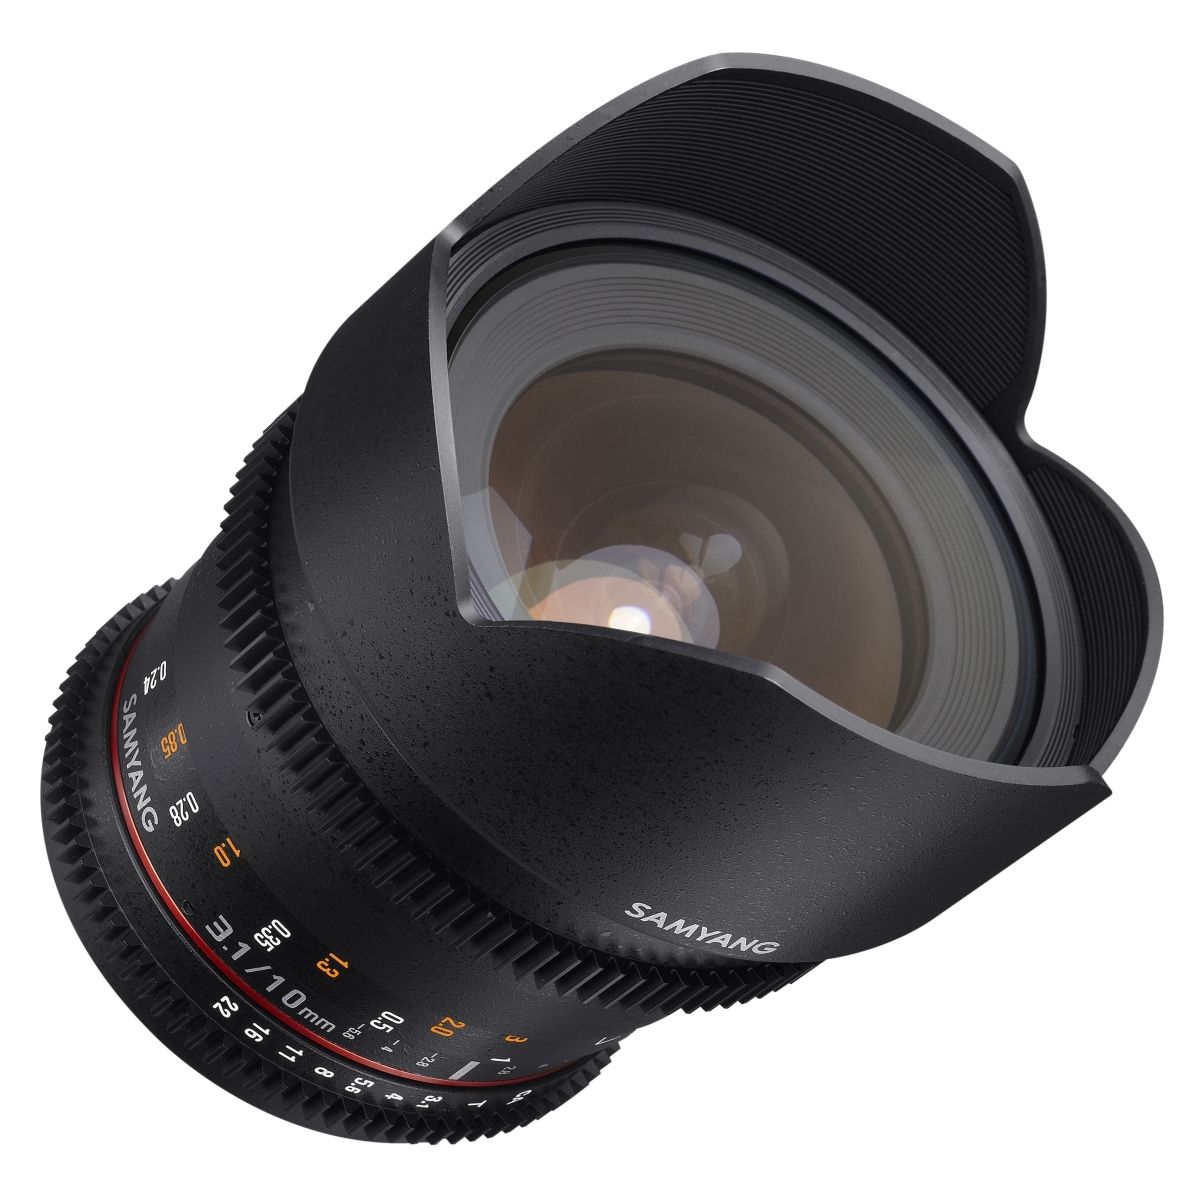 Samyang MF 10 mm 1:3,1 Video für Nikon DX